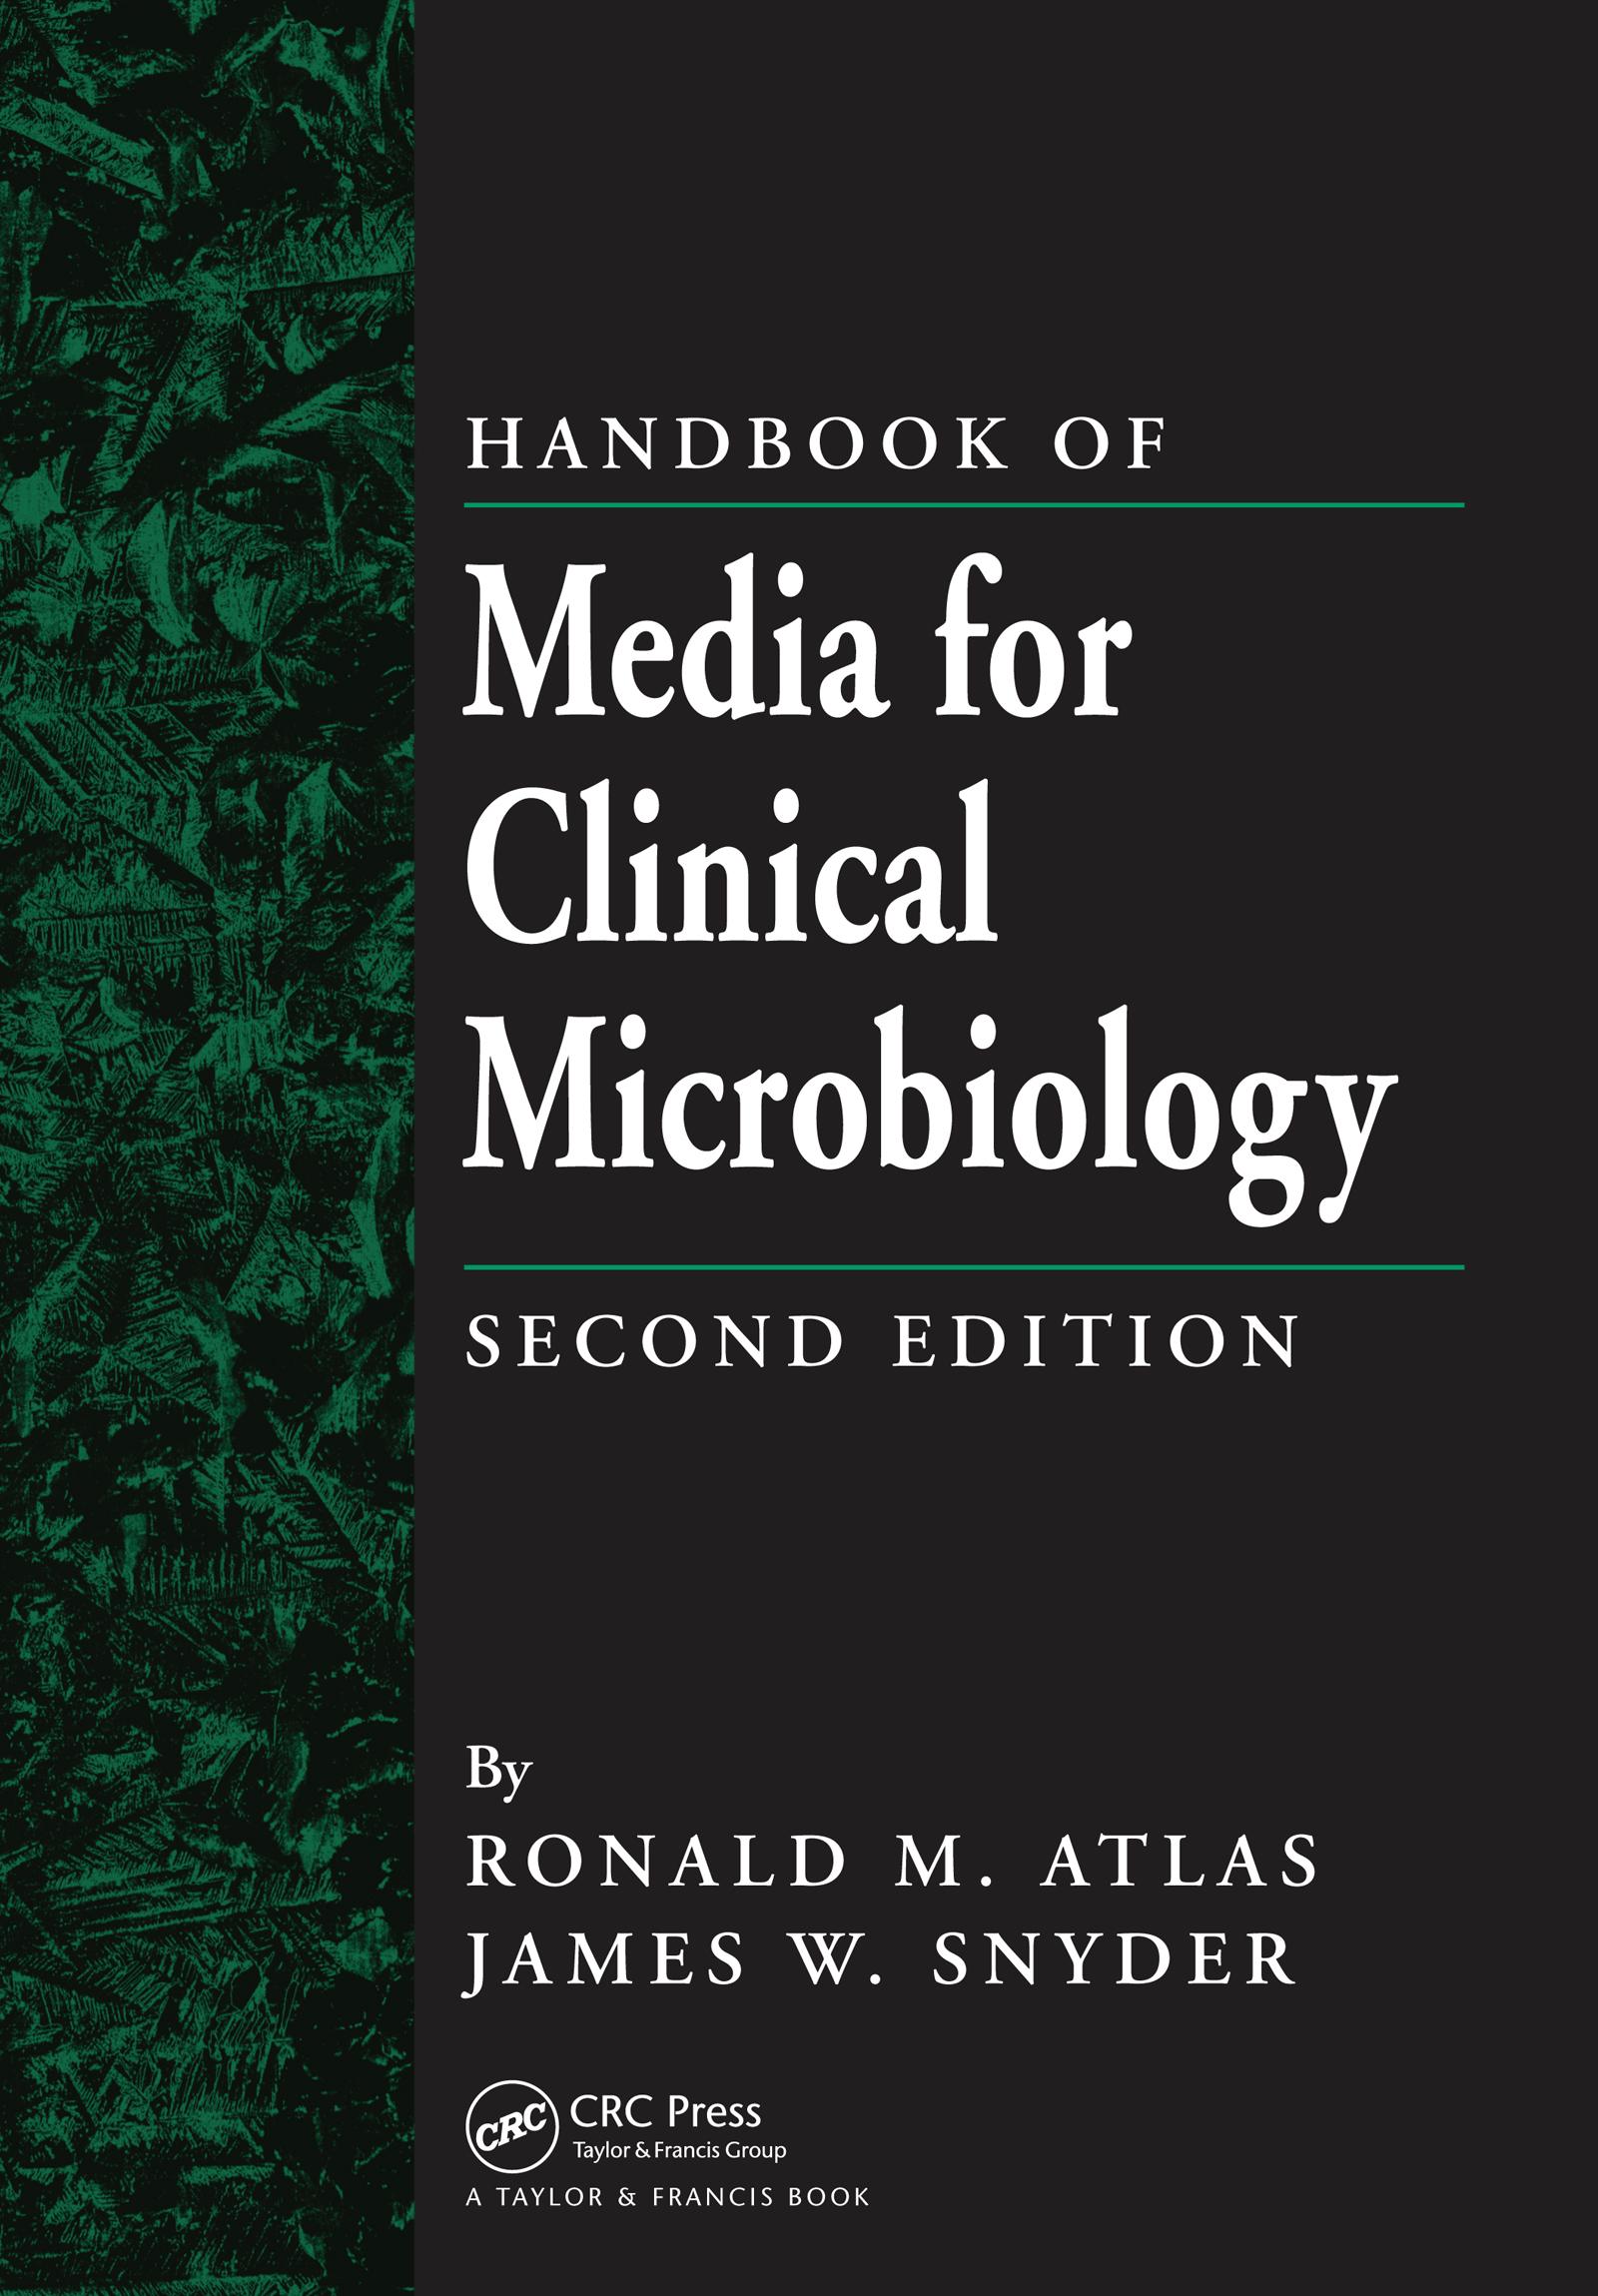 Snyder, J: Handbook of Media for Clinical Microbiology - James W. Snyder|Ronald M. Atlas